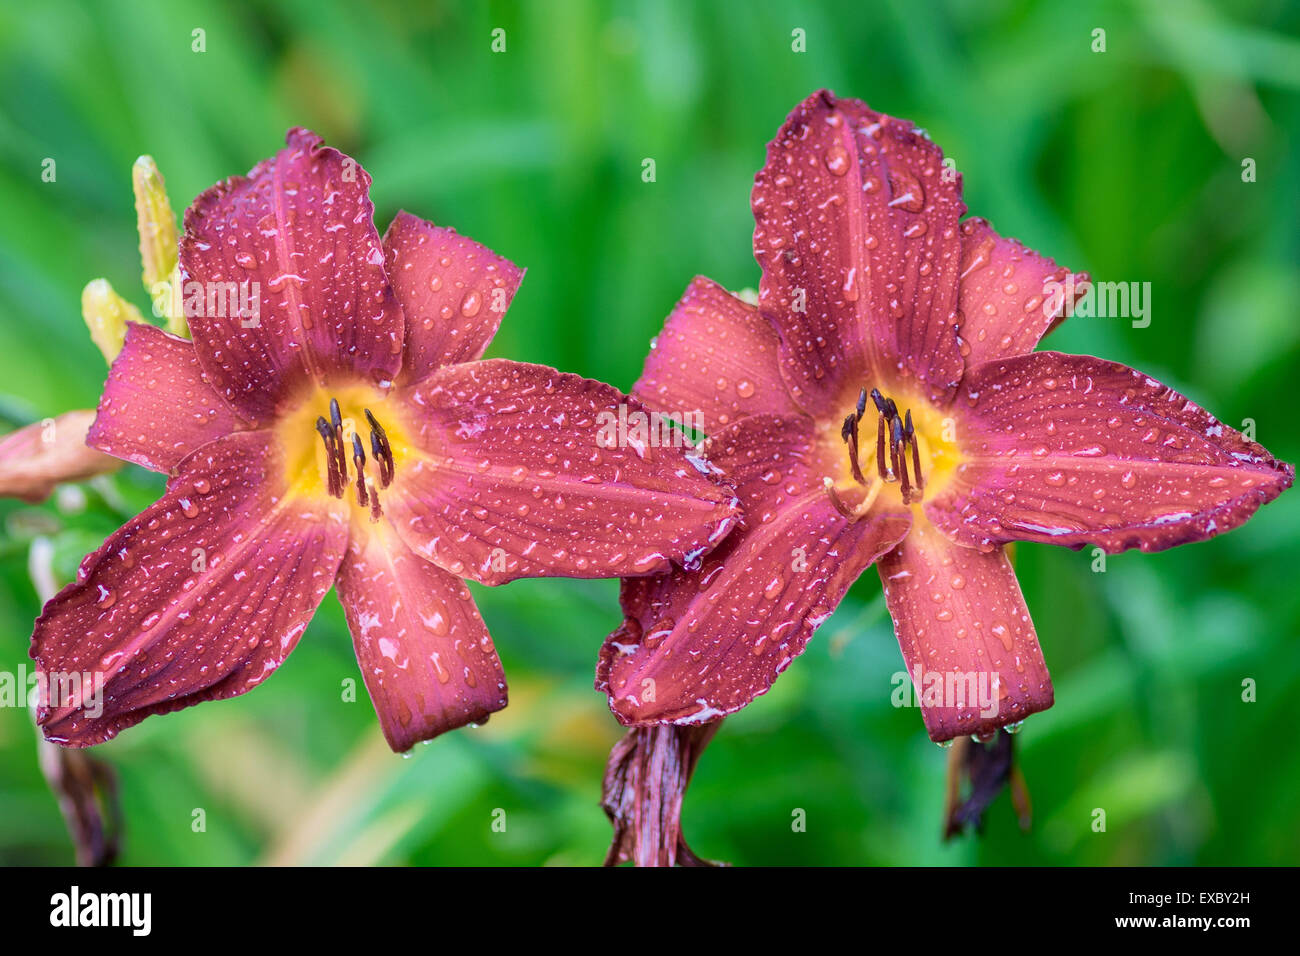 Two crimson lily flowers in raindrops Hemerocallis Stock Photo